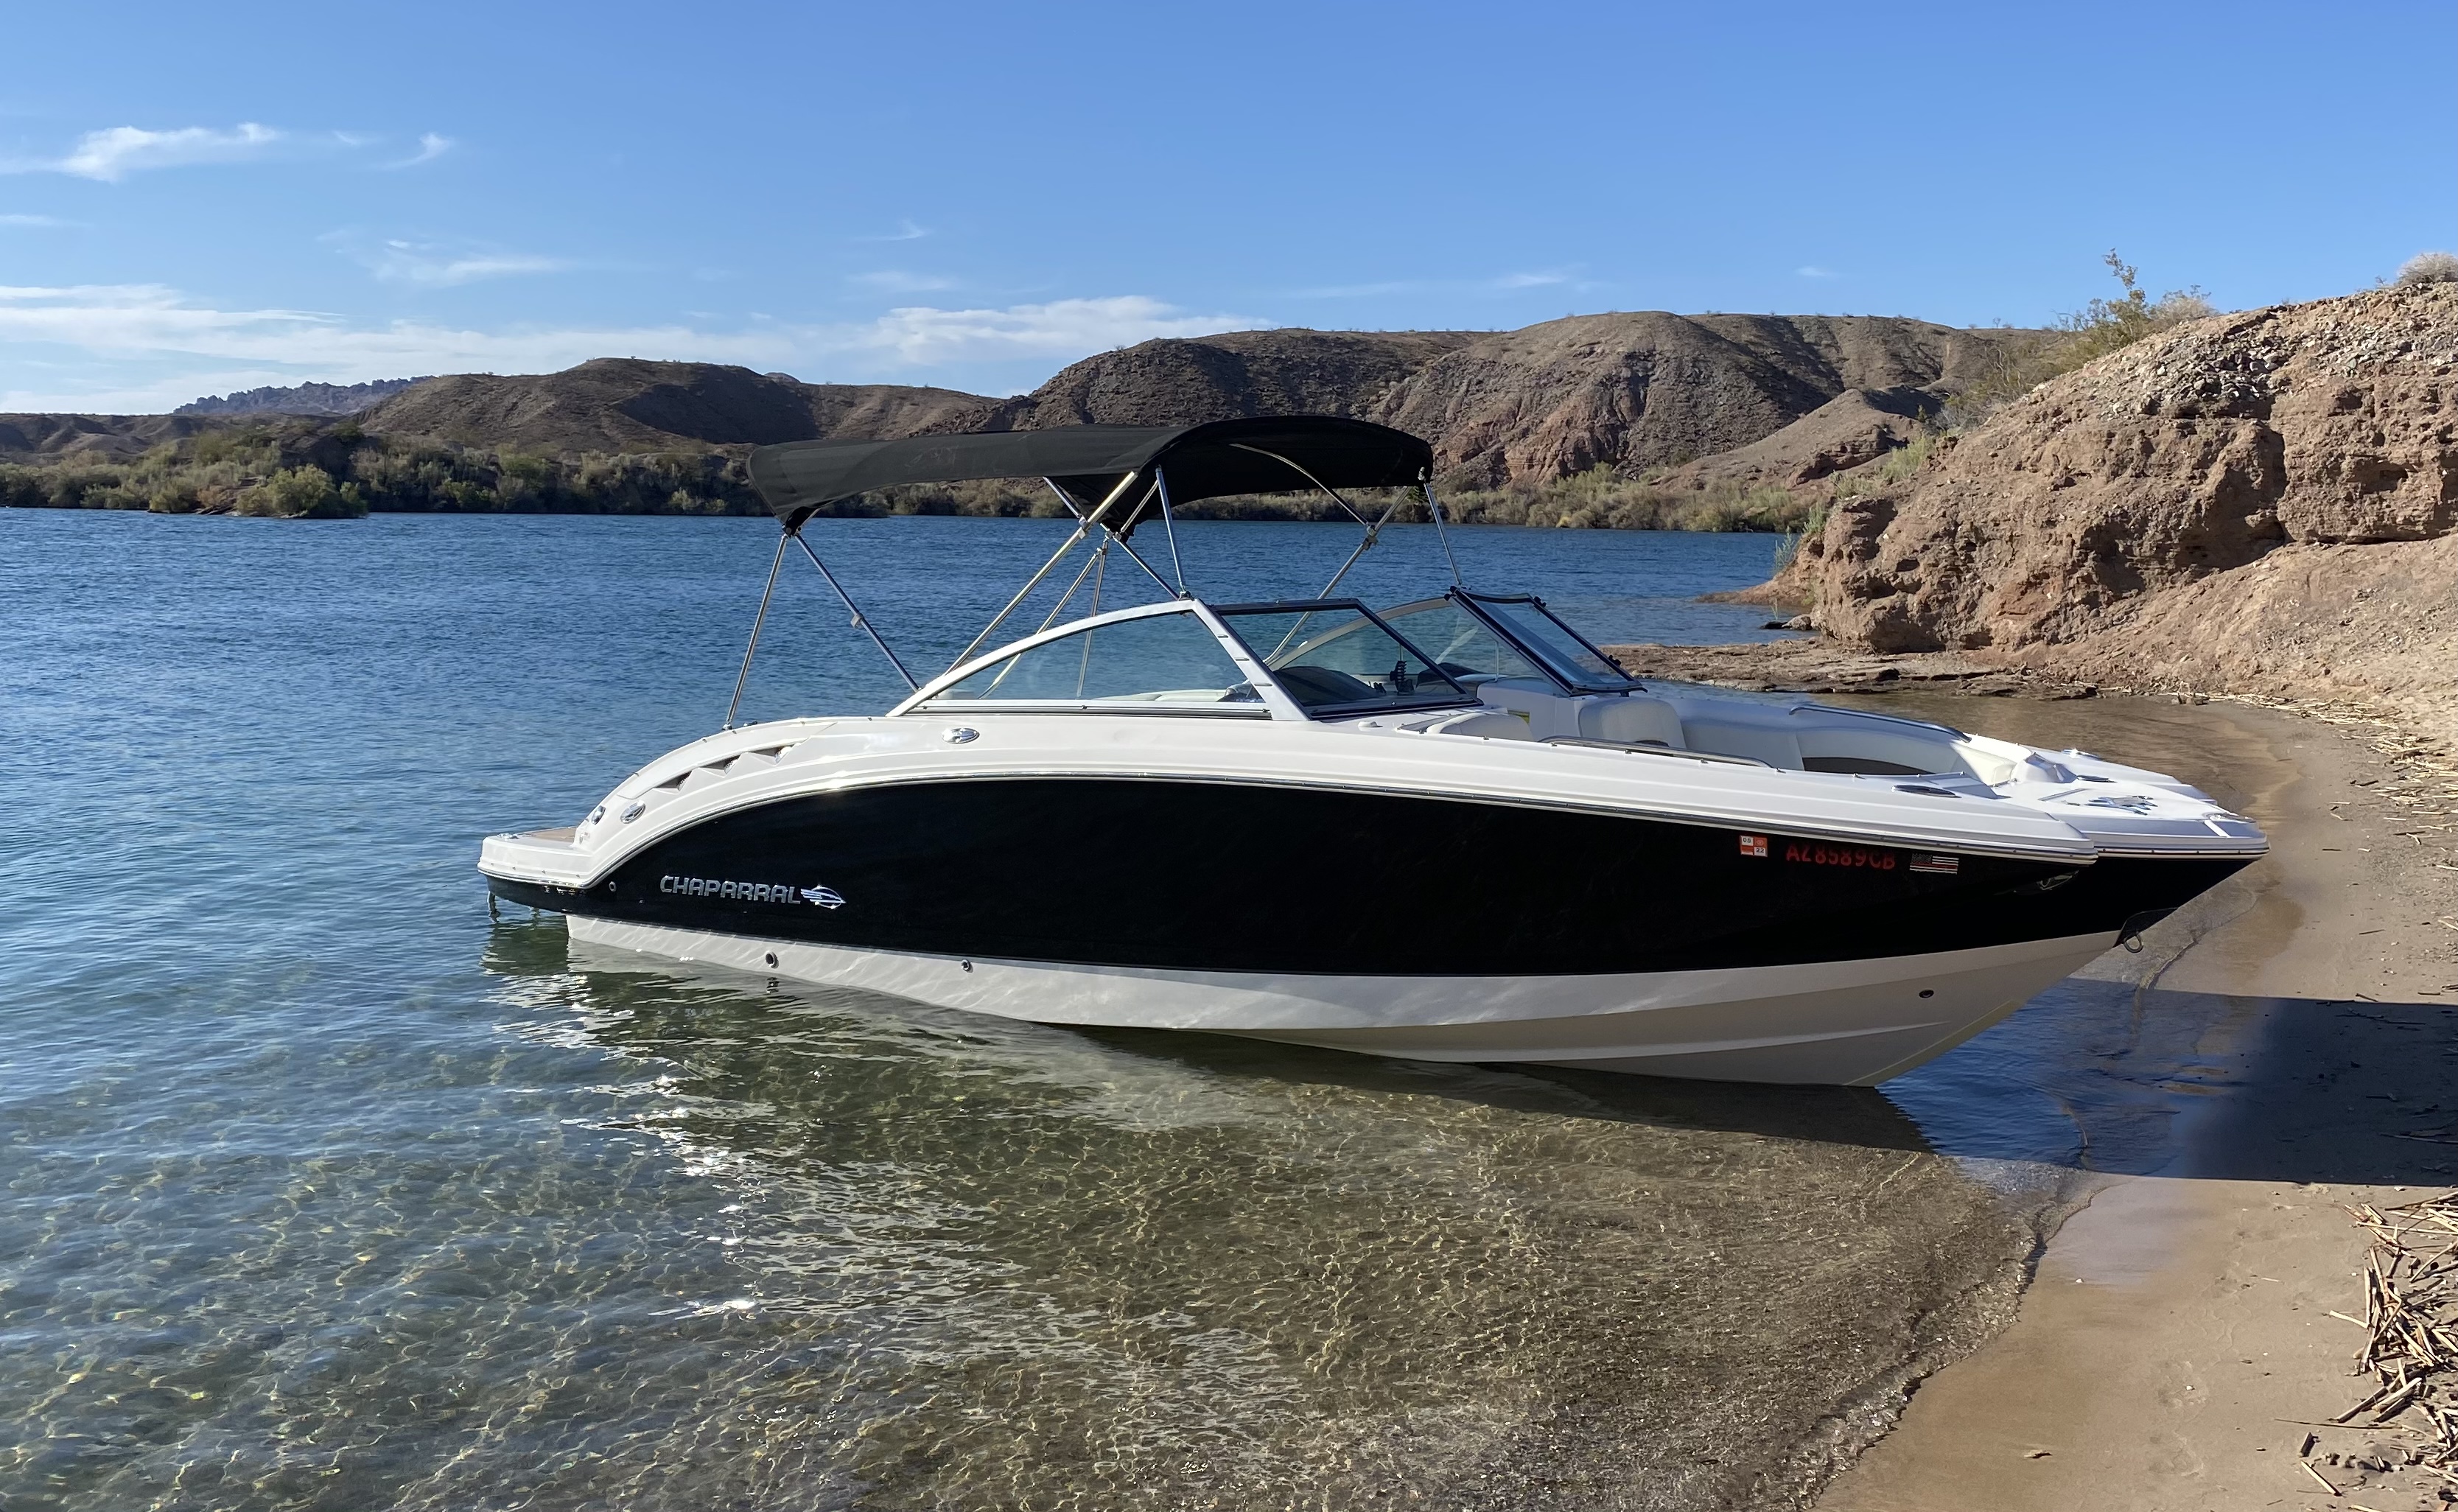 2014 Chaparral 244 Sunesta  Power boat for sale in Lk Havasu Cty, AZ - image 1 